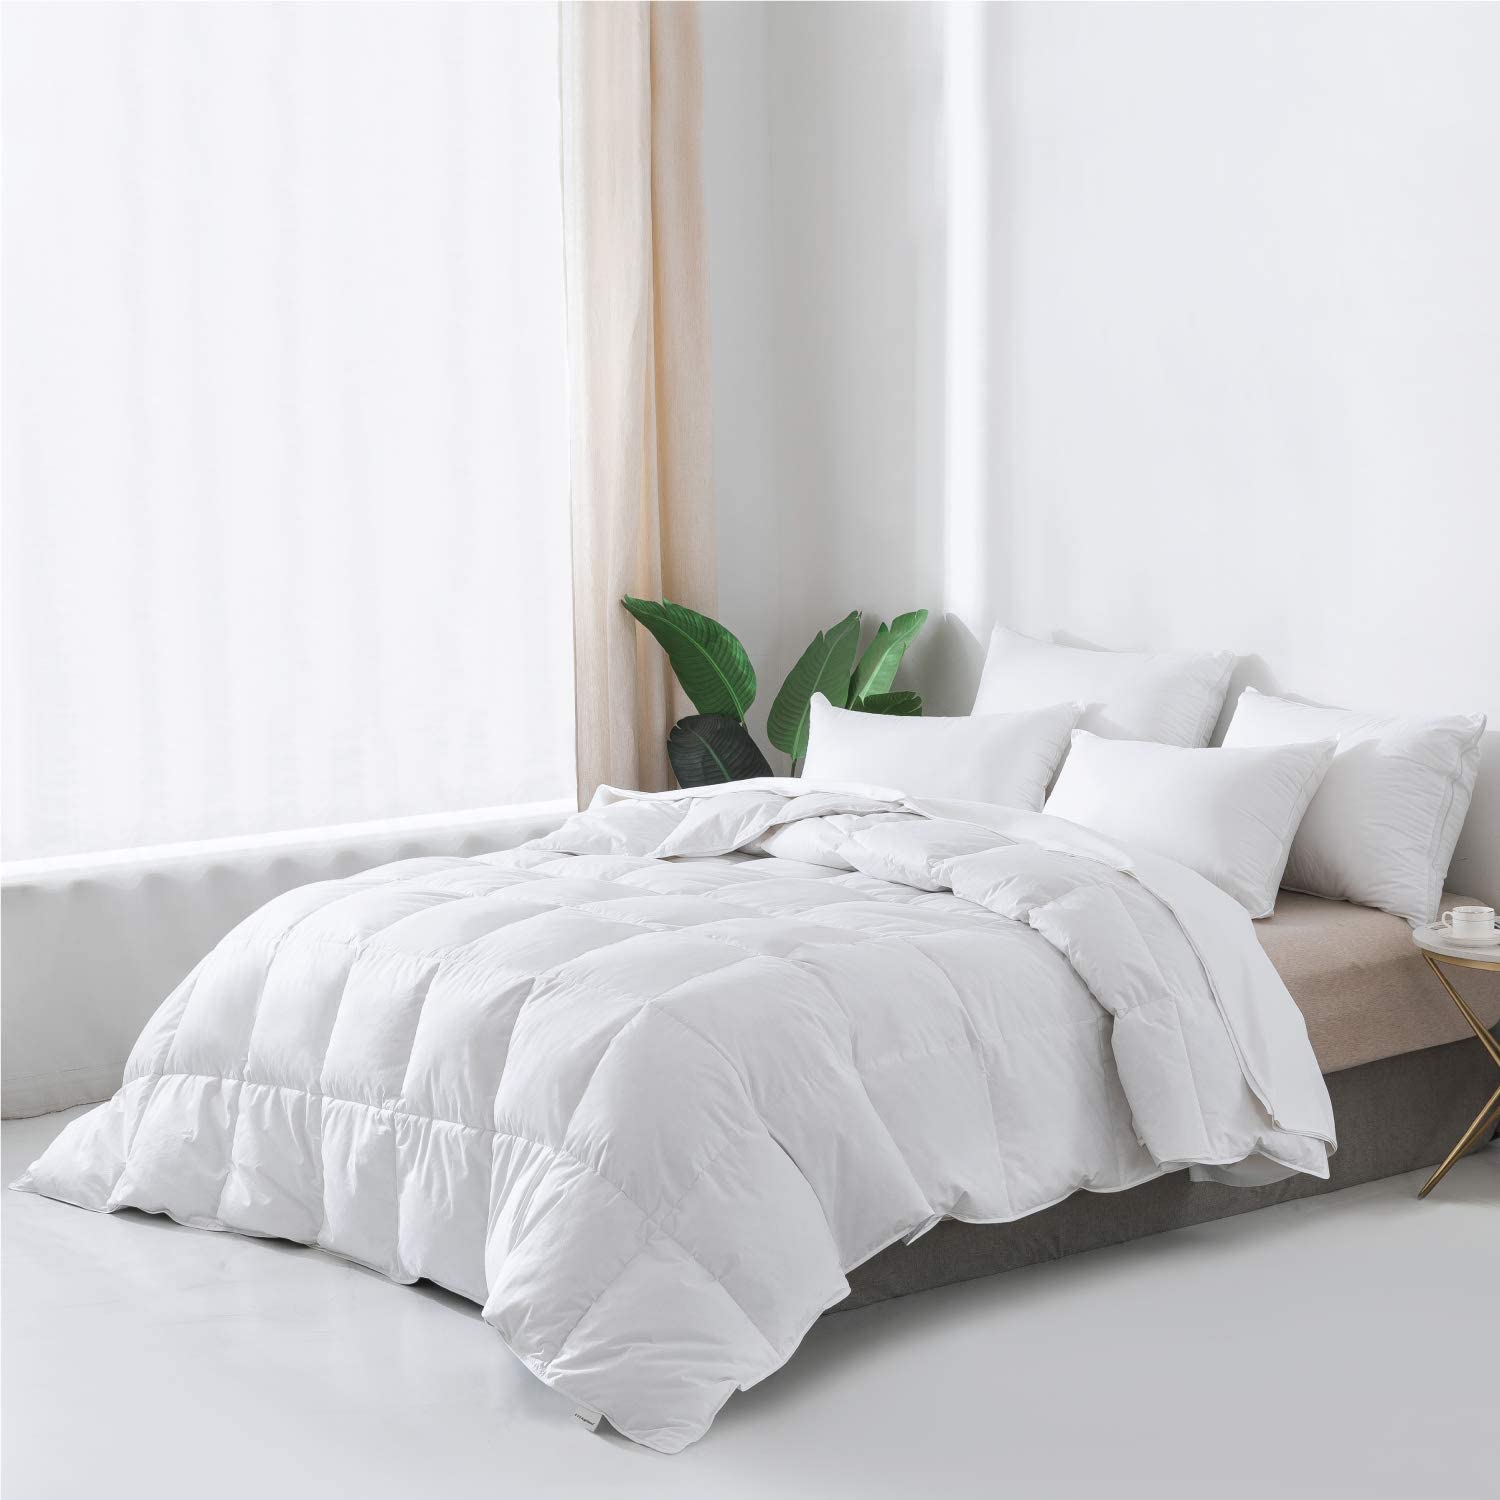 Everspread Essential All-Season Goose Down Comforter Duvet Insert, Luxury  Goose | eBay